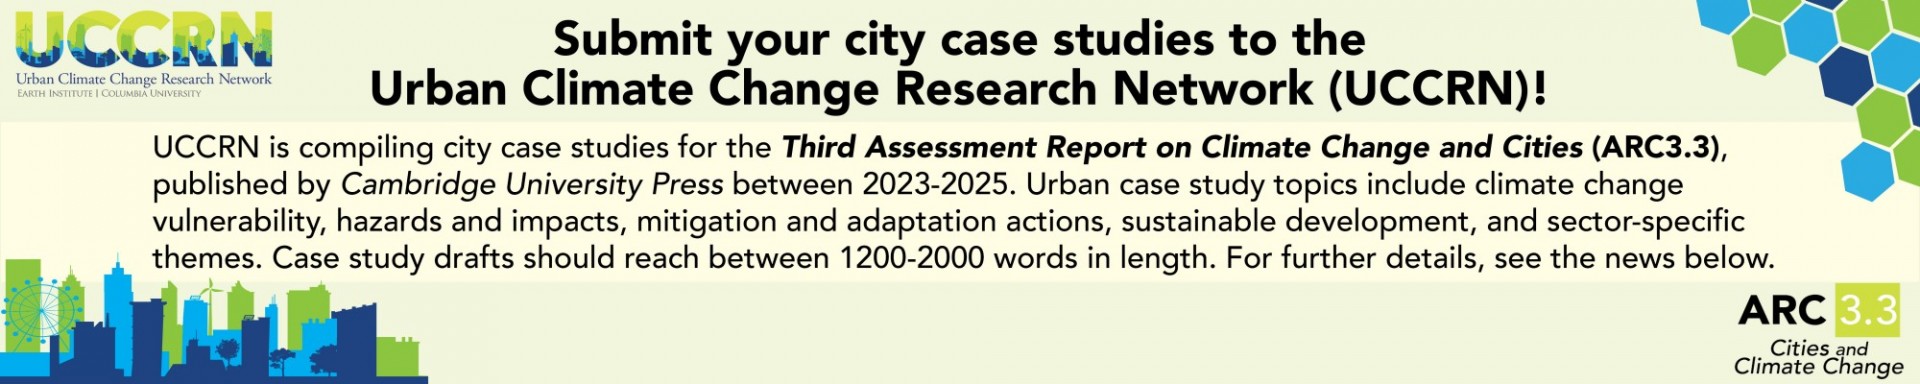 Submit your city case studies!